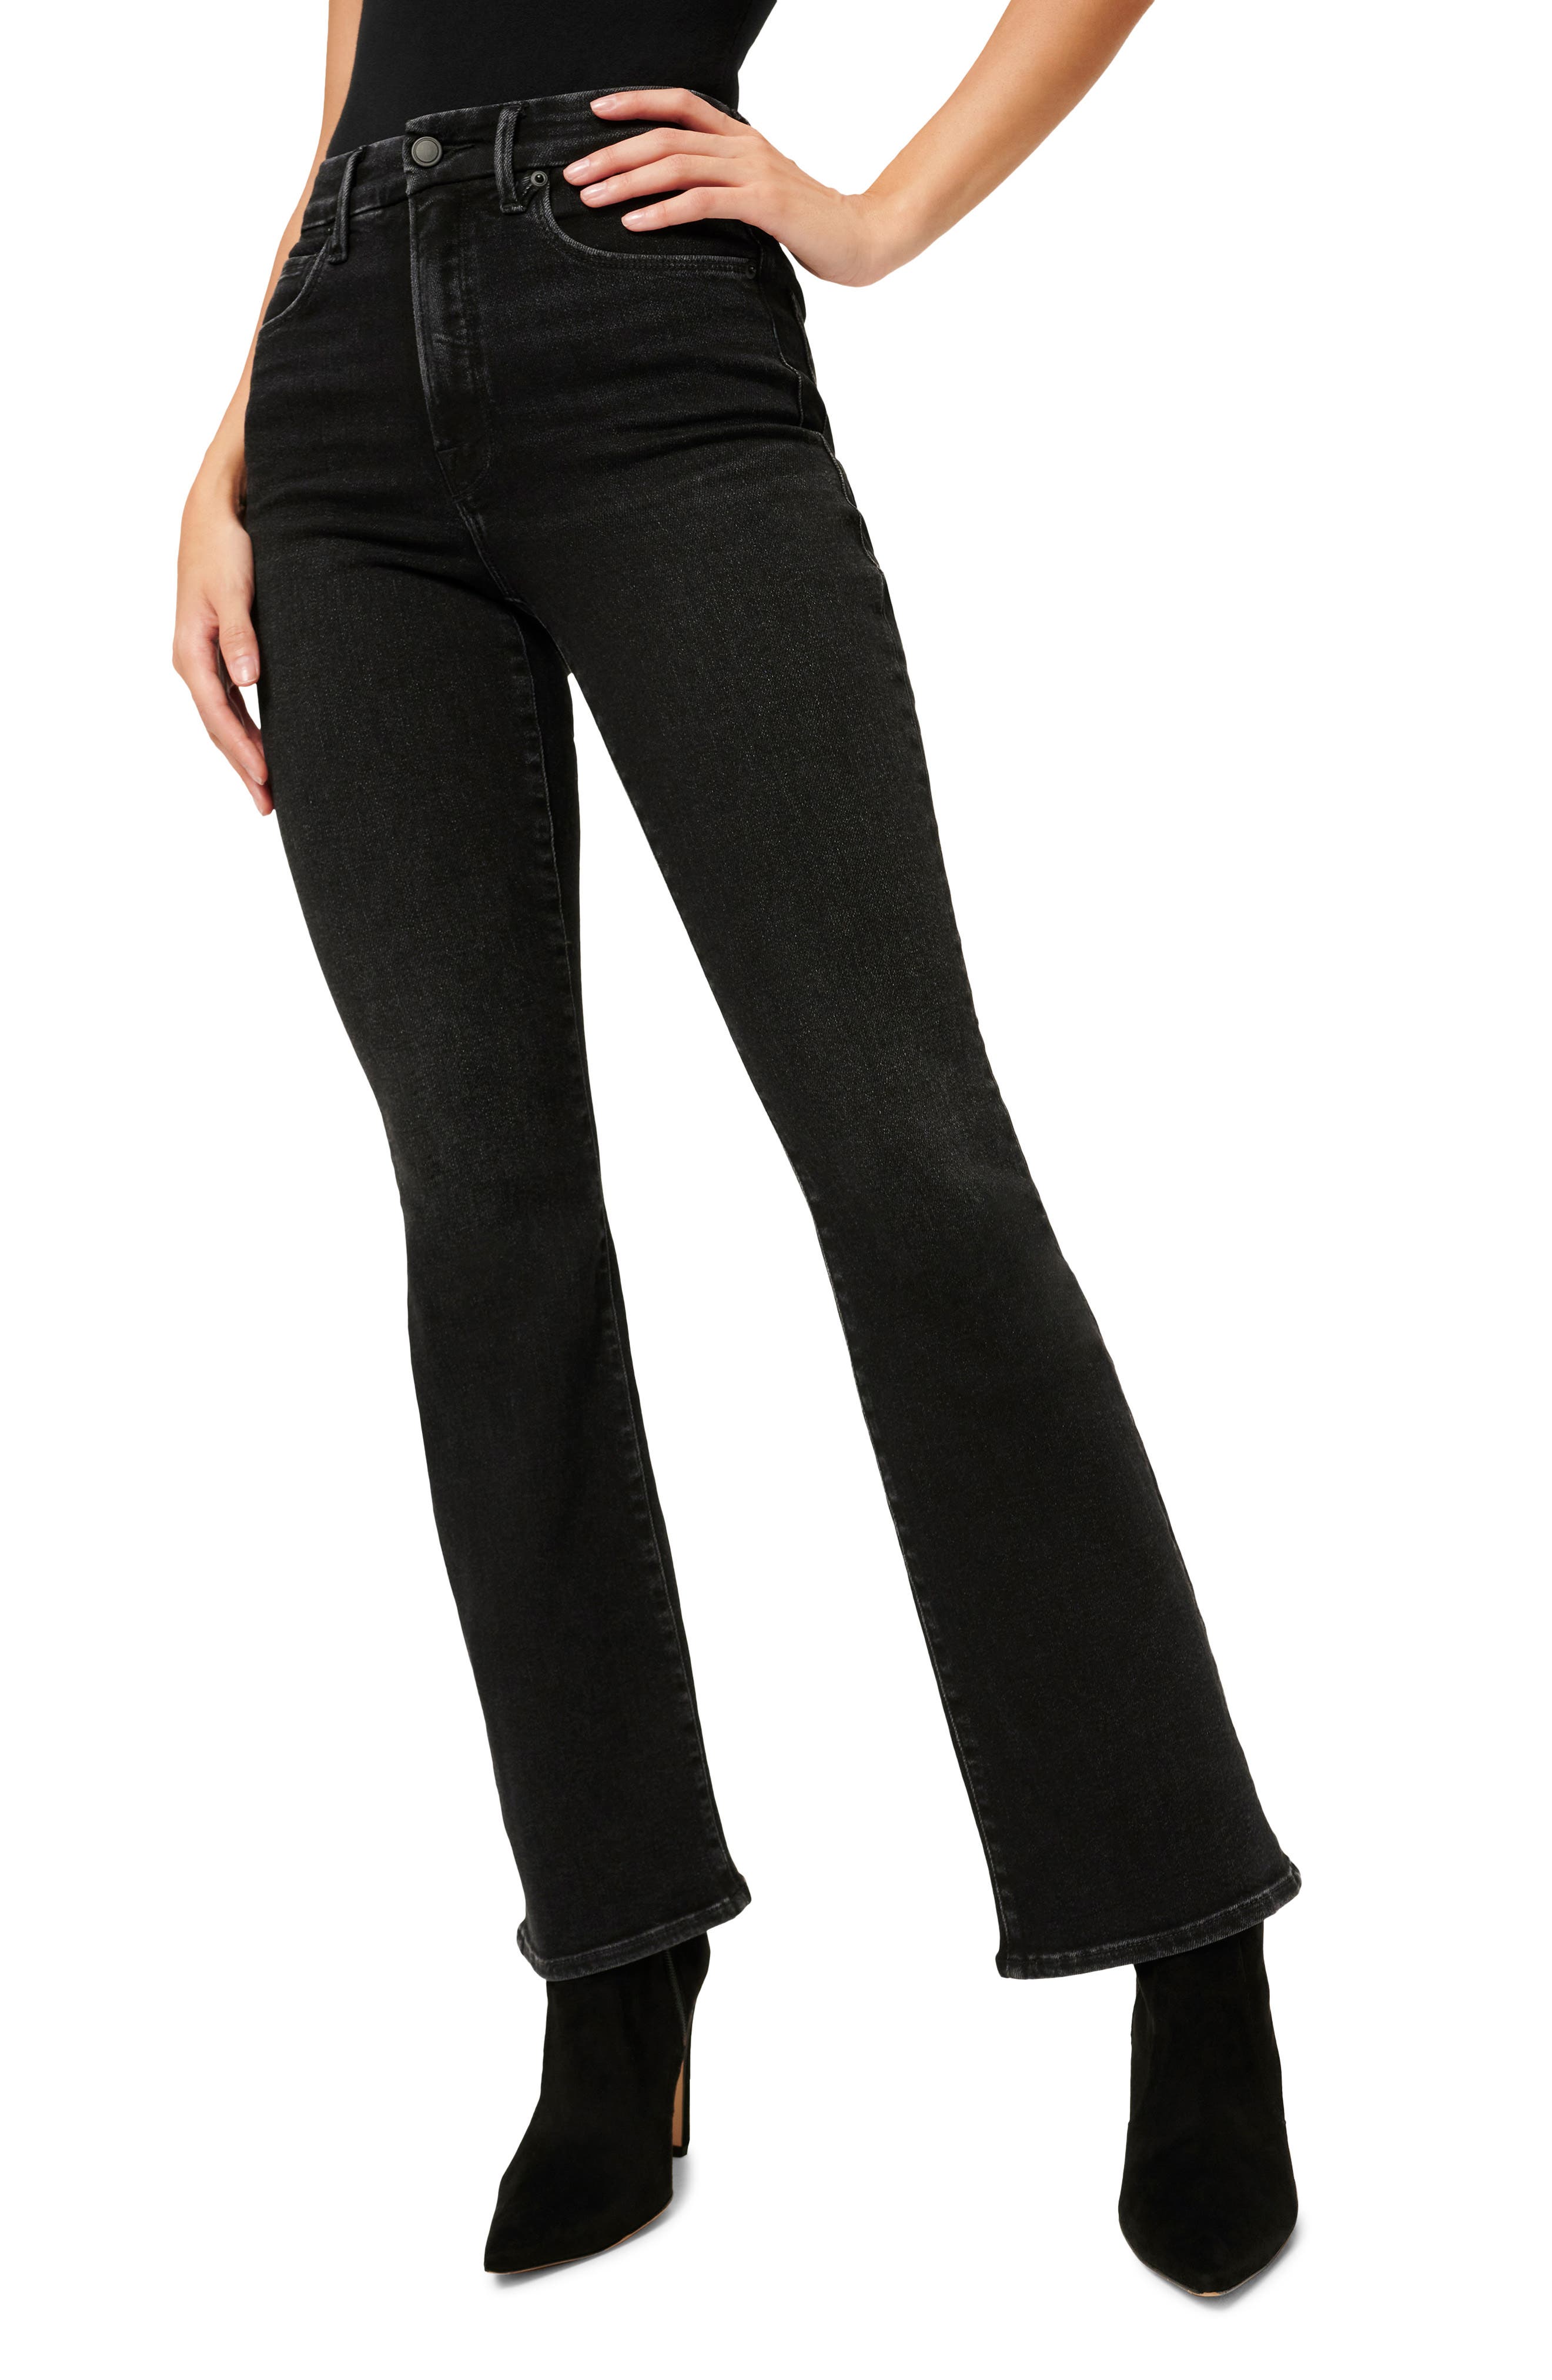 ZITY Jeans for Women/High Waist Bootcut Boyfriend Basic Bootcut Jeans Black 